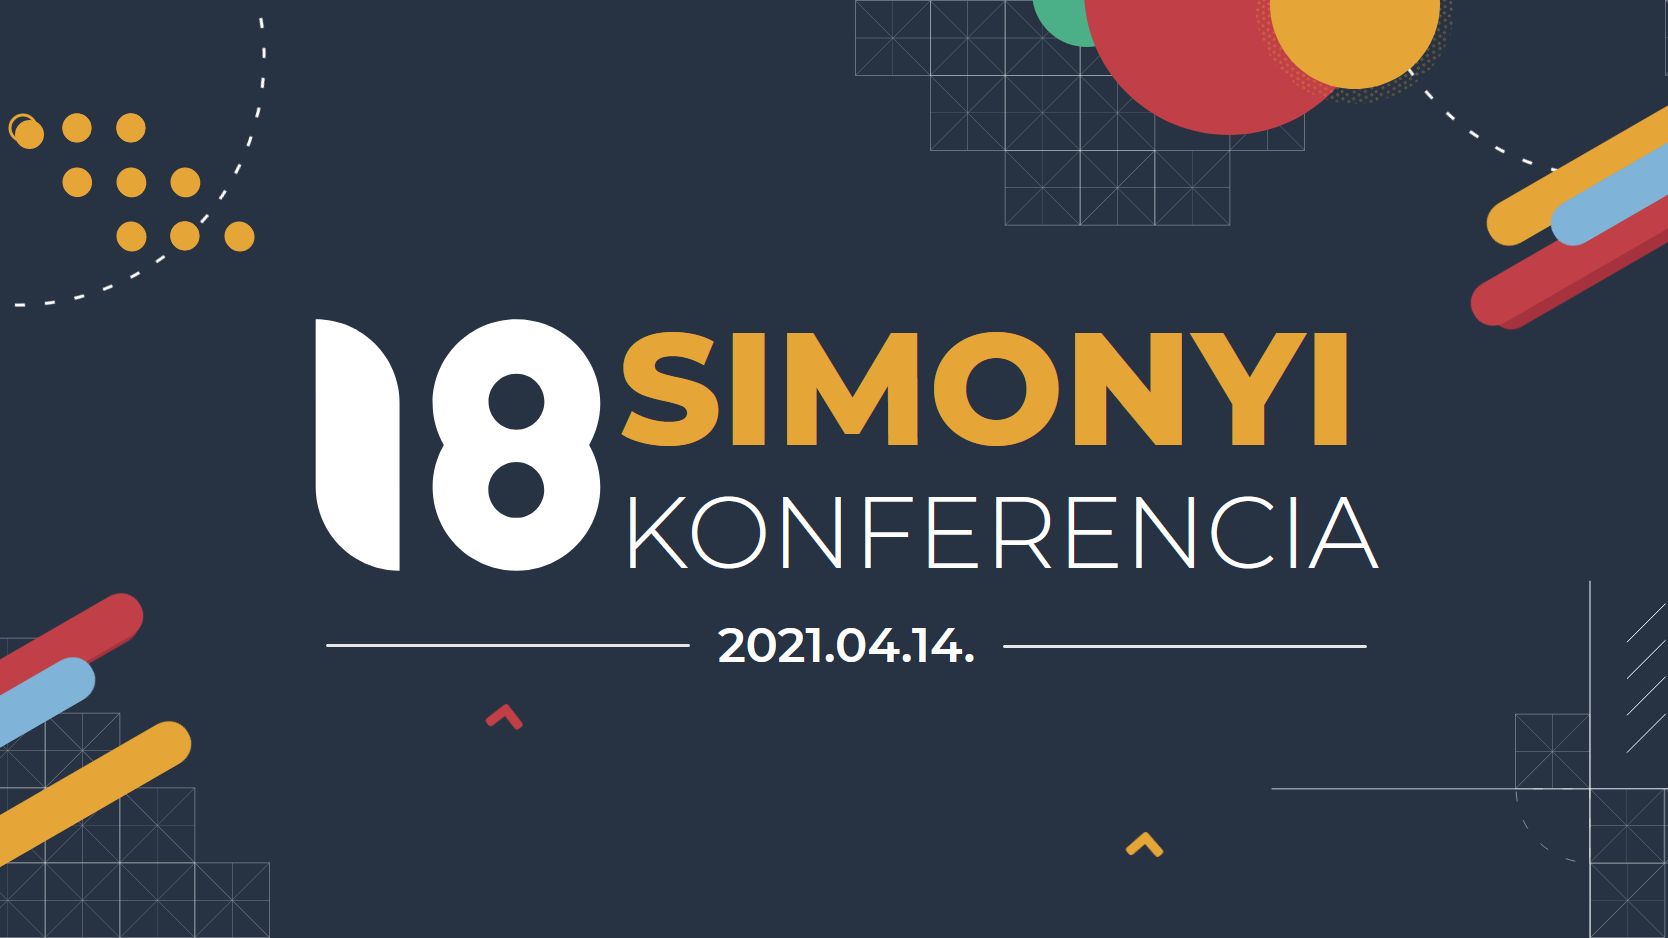 18. Simonyi Konferencia